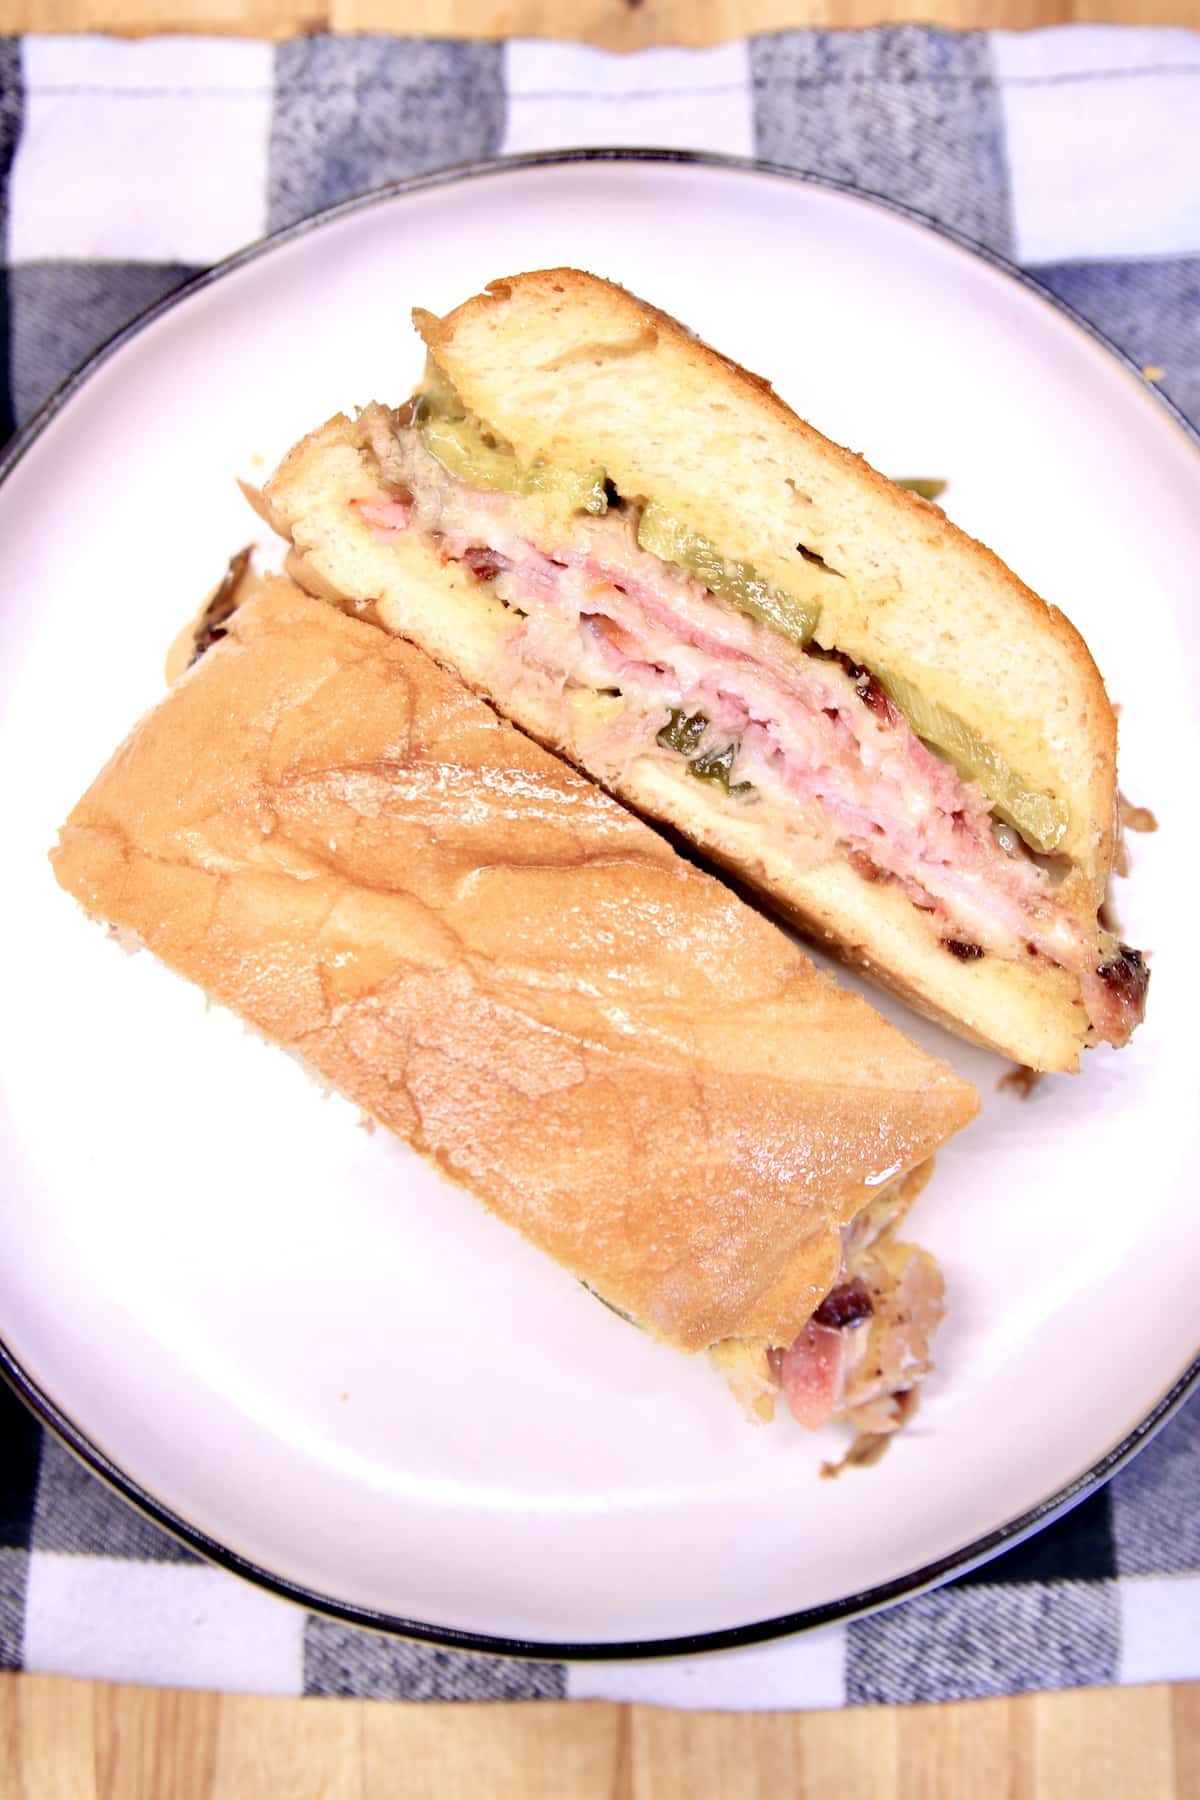 Smoked pork, Cuban style sandwich on a plate.